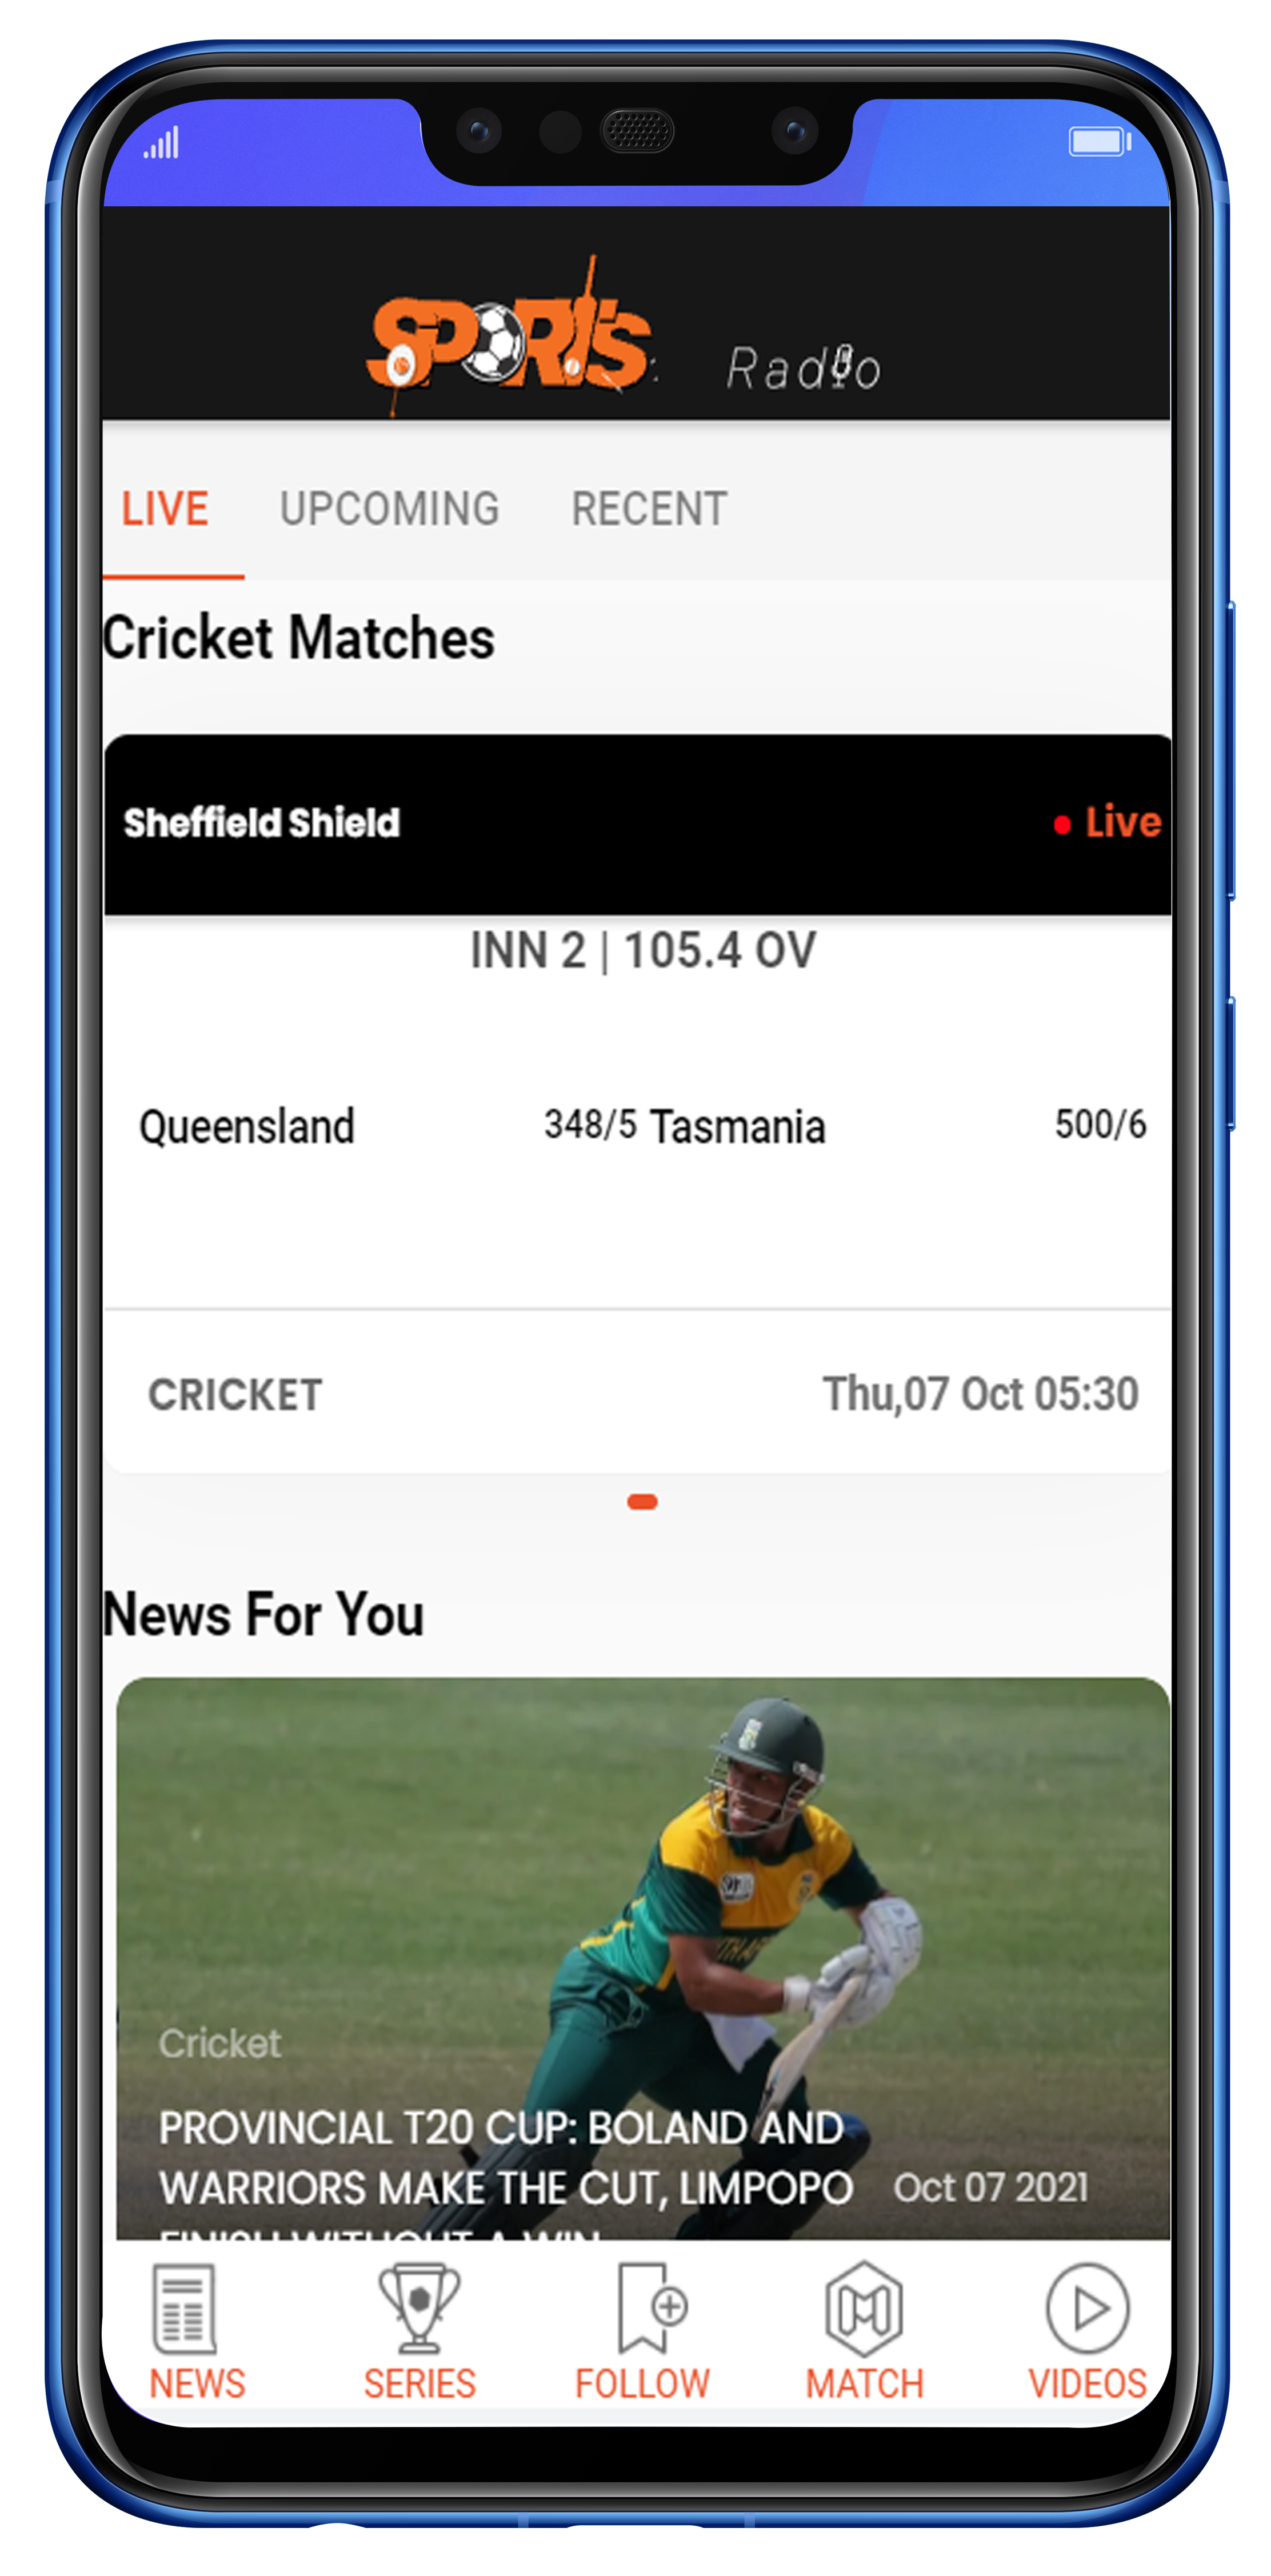 Sports Radio - Live Cricket Score, Live News